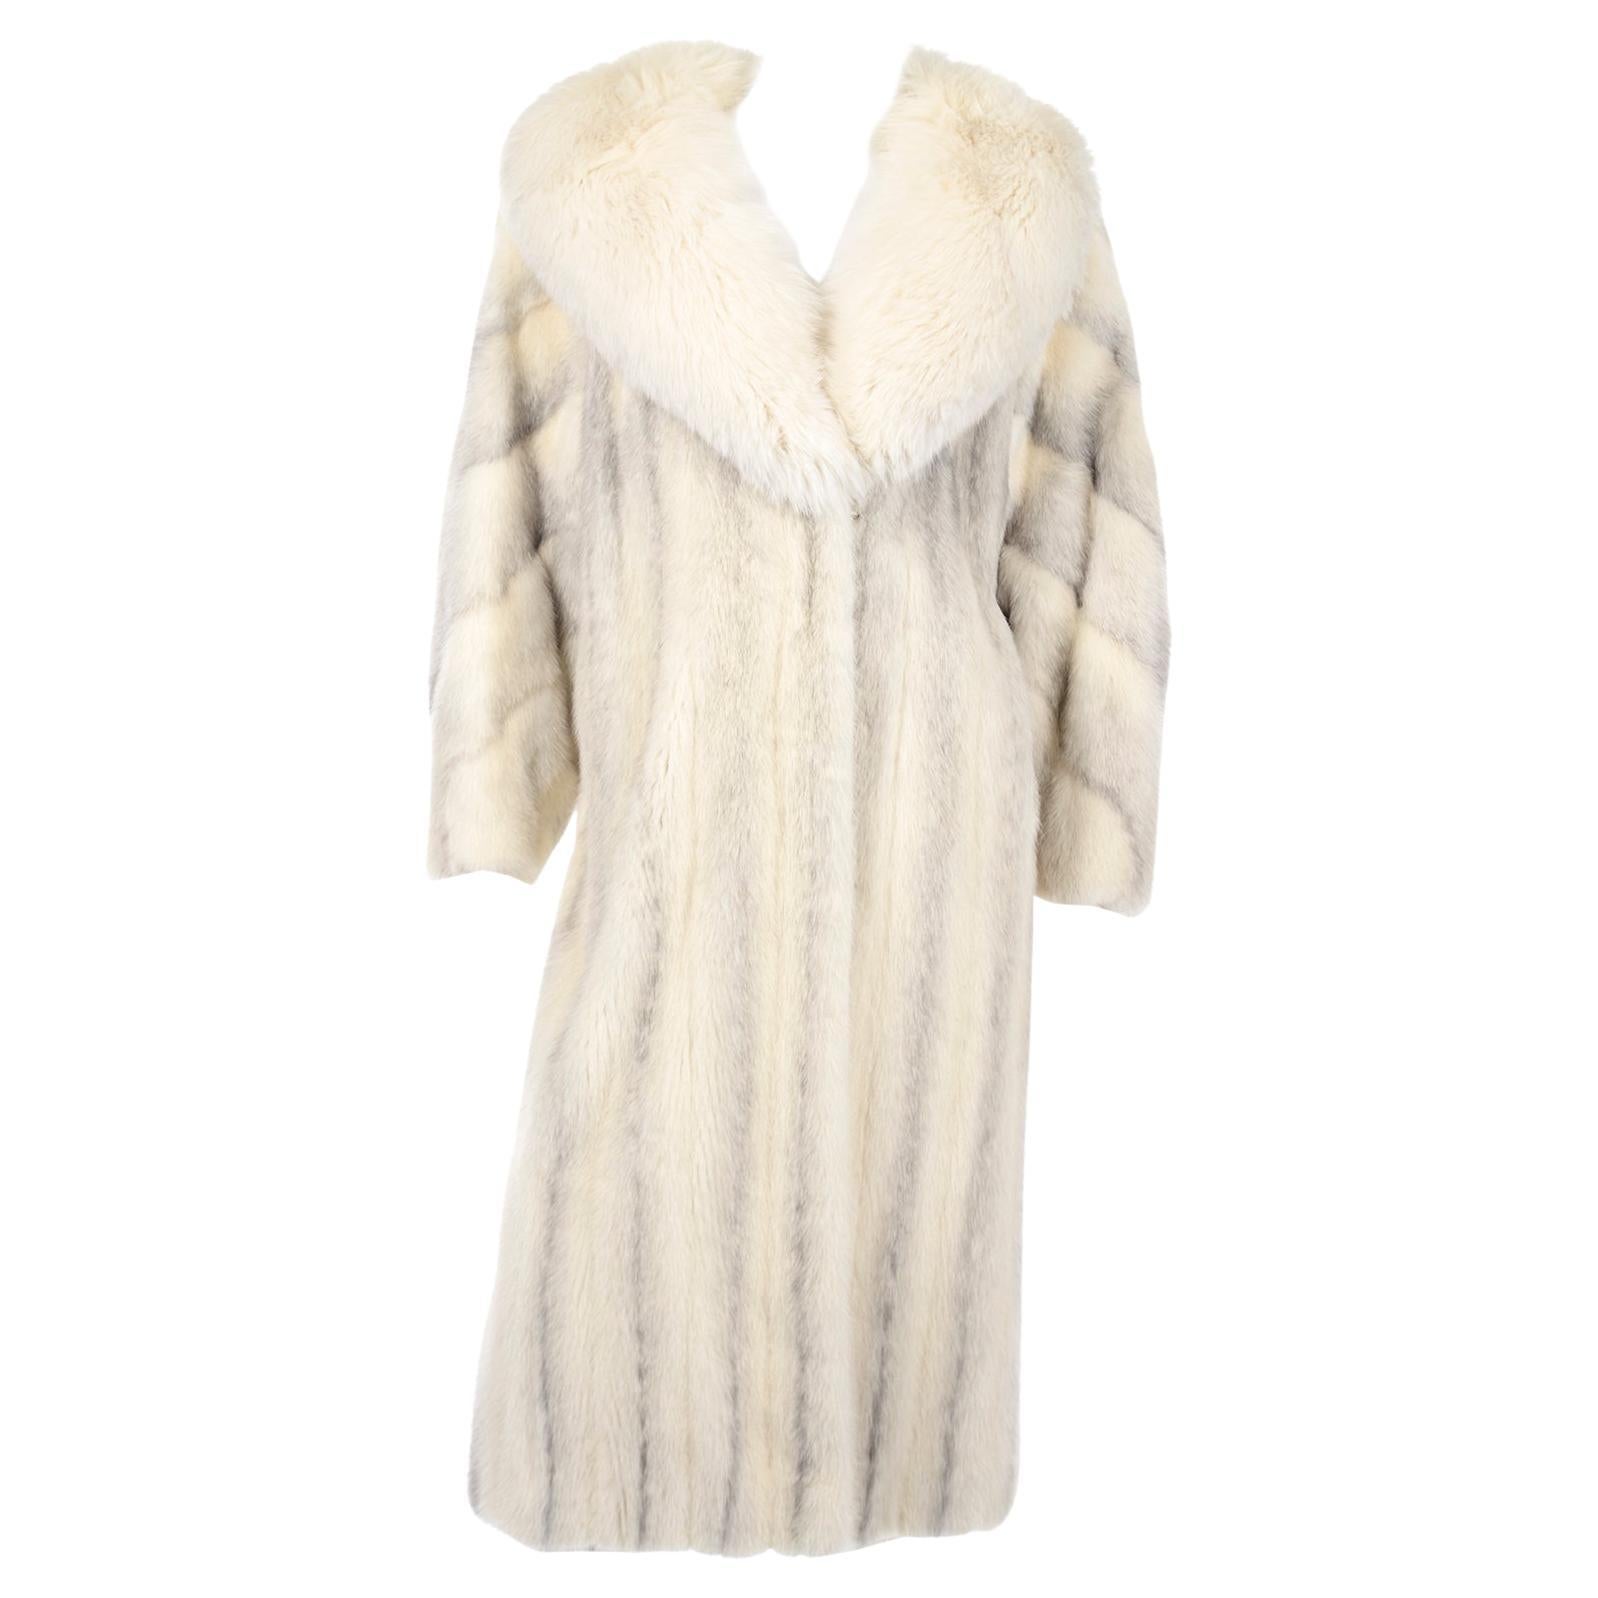 Vintage Christian Dior Fourrure White Mink Fur Coat w Fox Fur Collar at